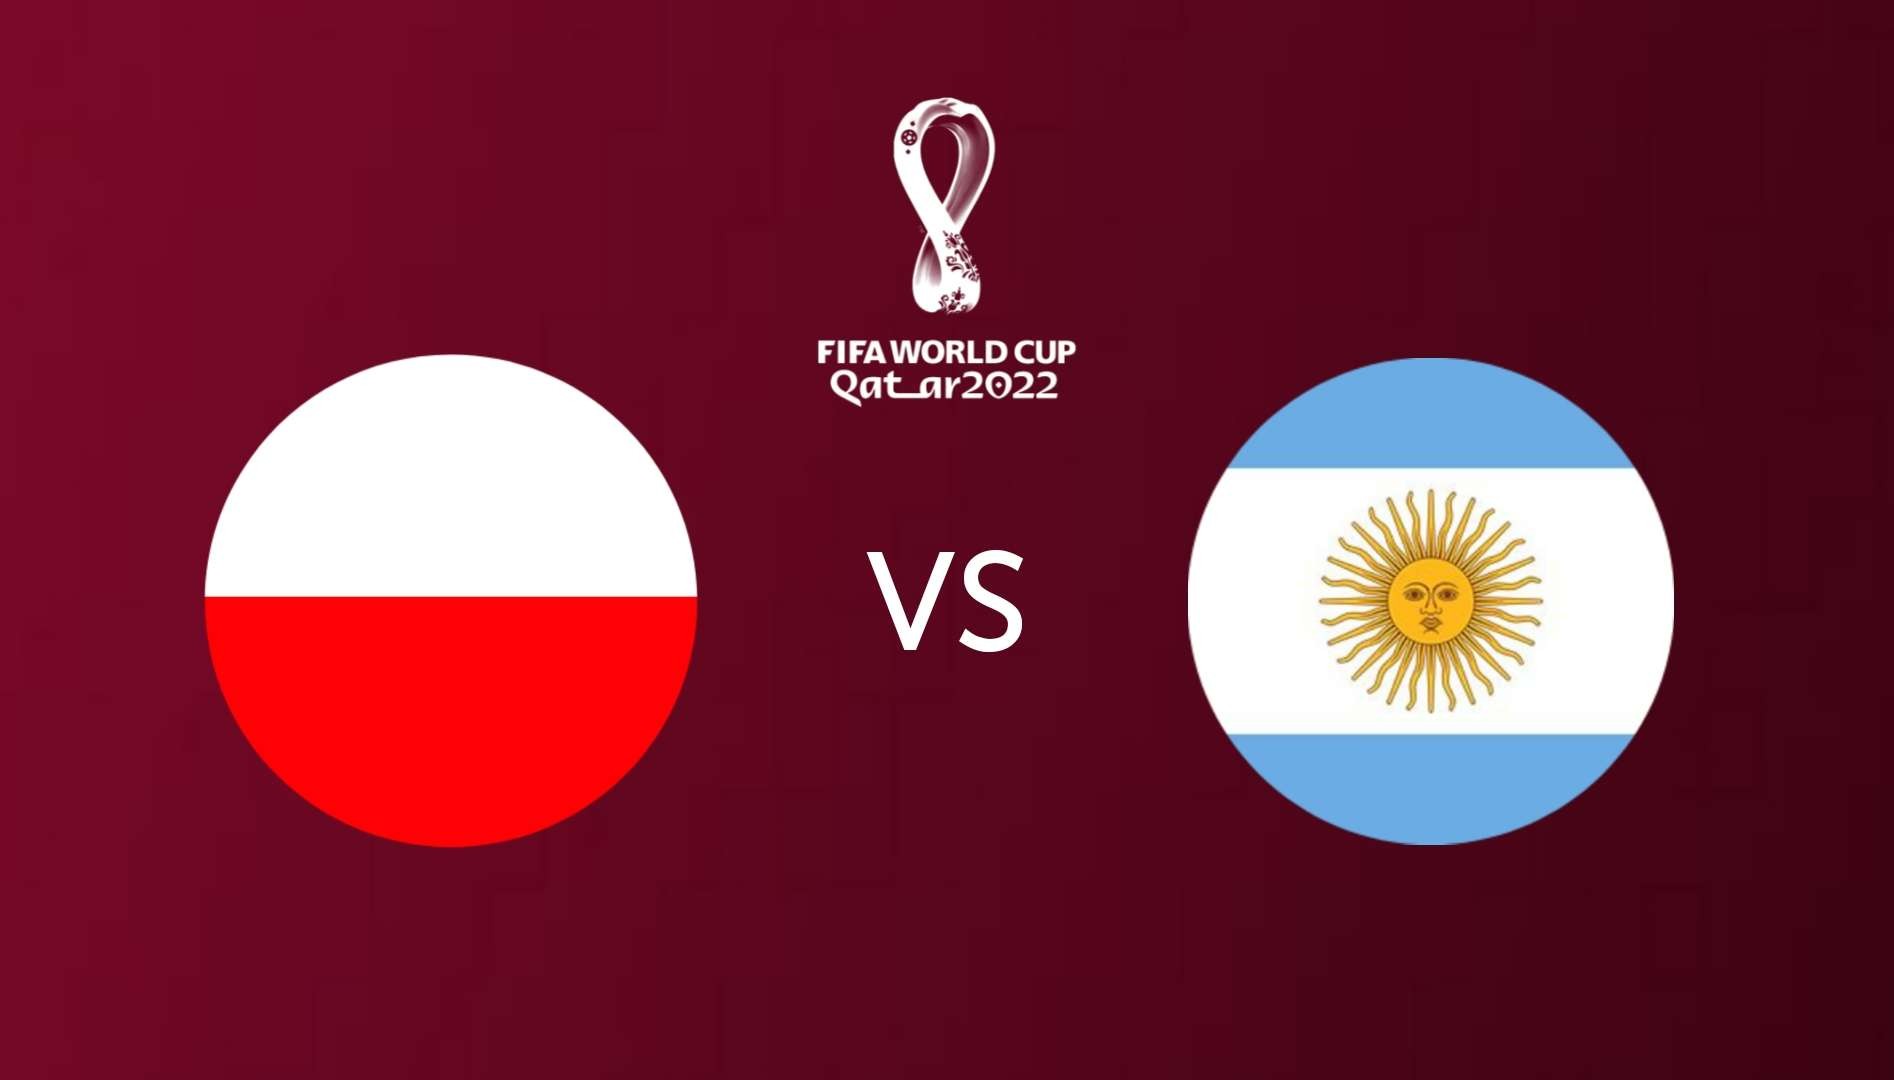 Polandia vs Argentina. (Fa Vidhi/Ngopibareng.id)